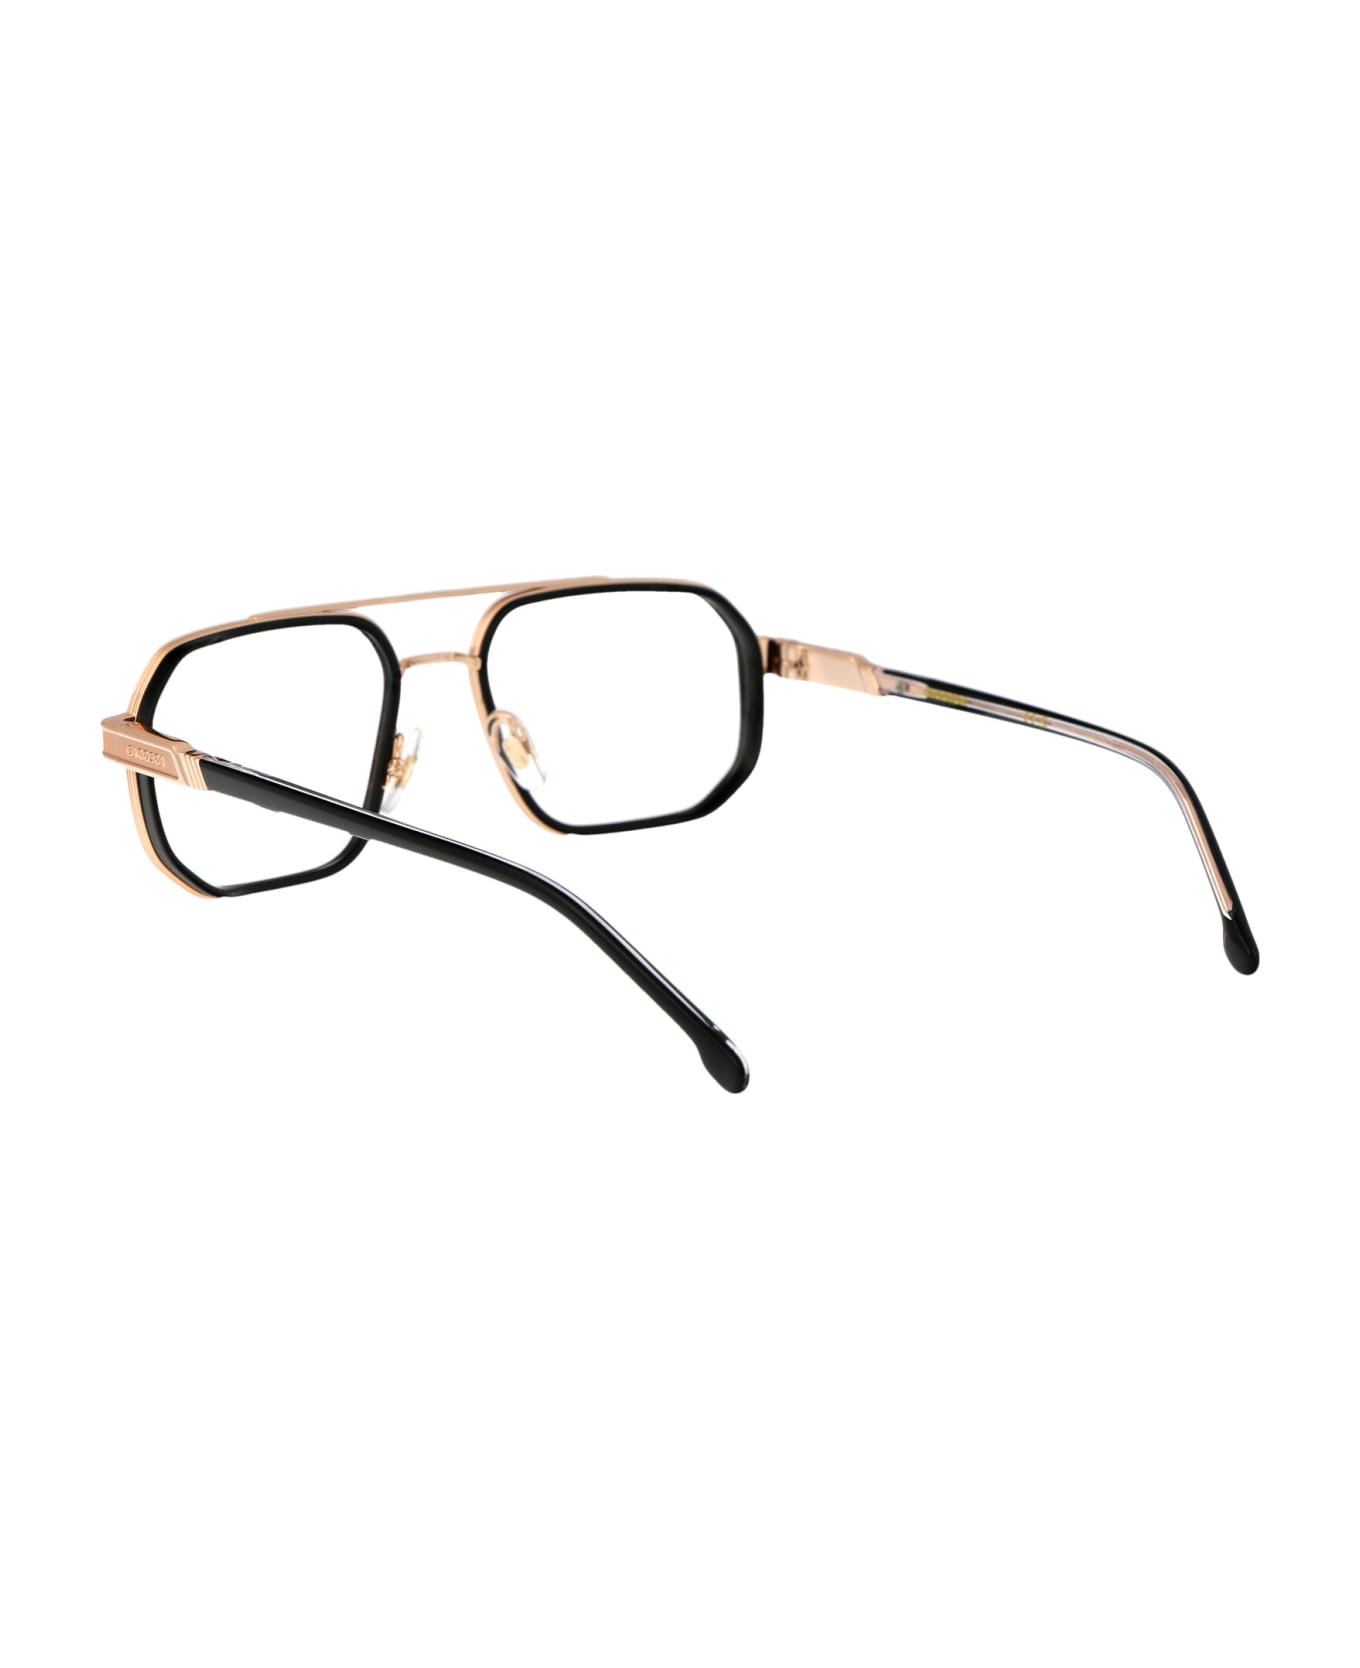 Carrera 1137 Glasses - 001 YELL GOLD アイウェア